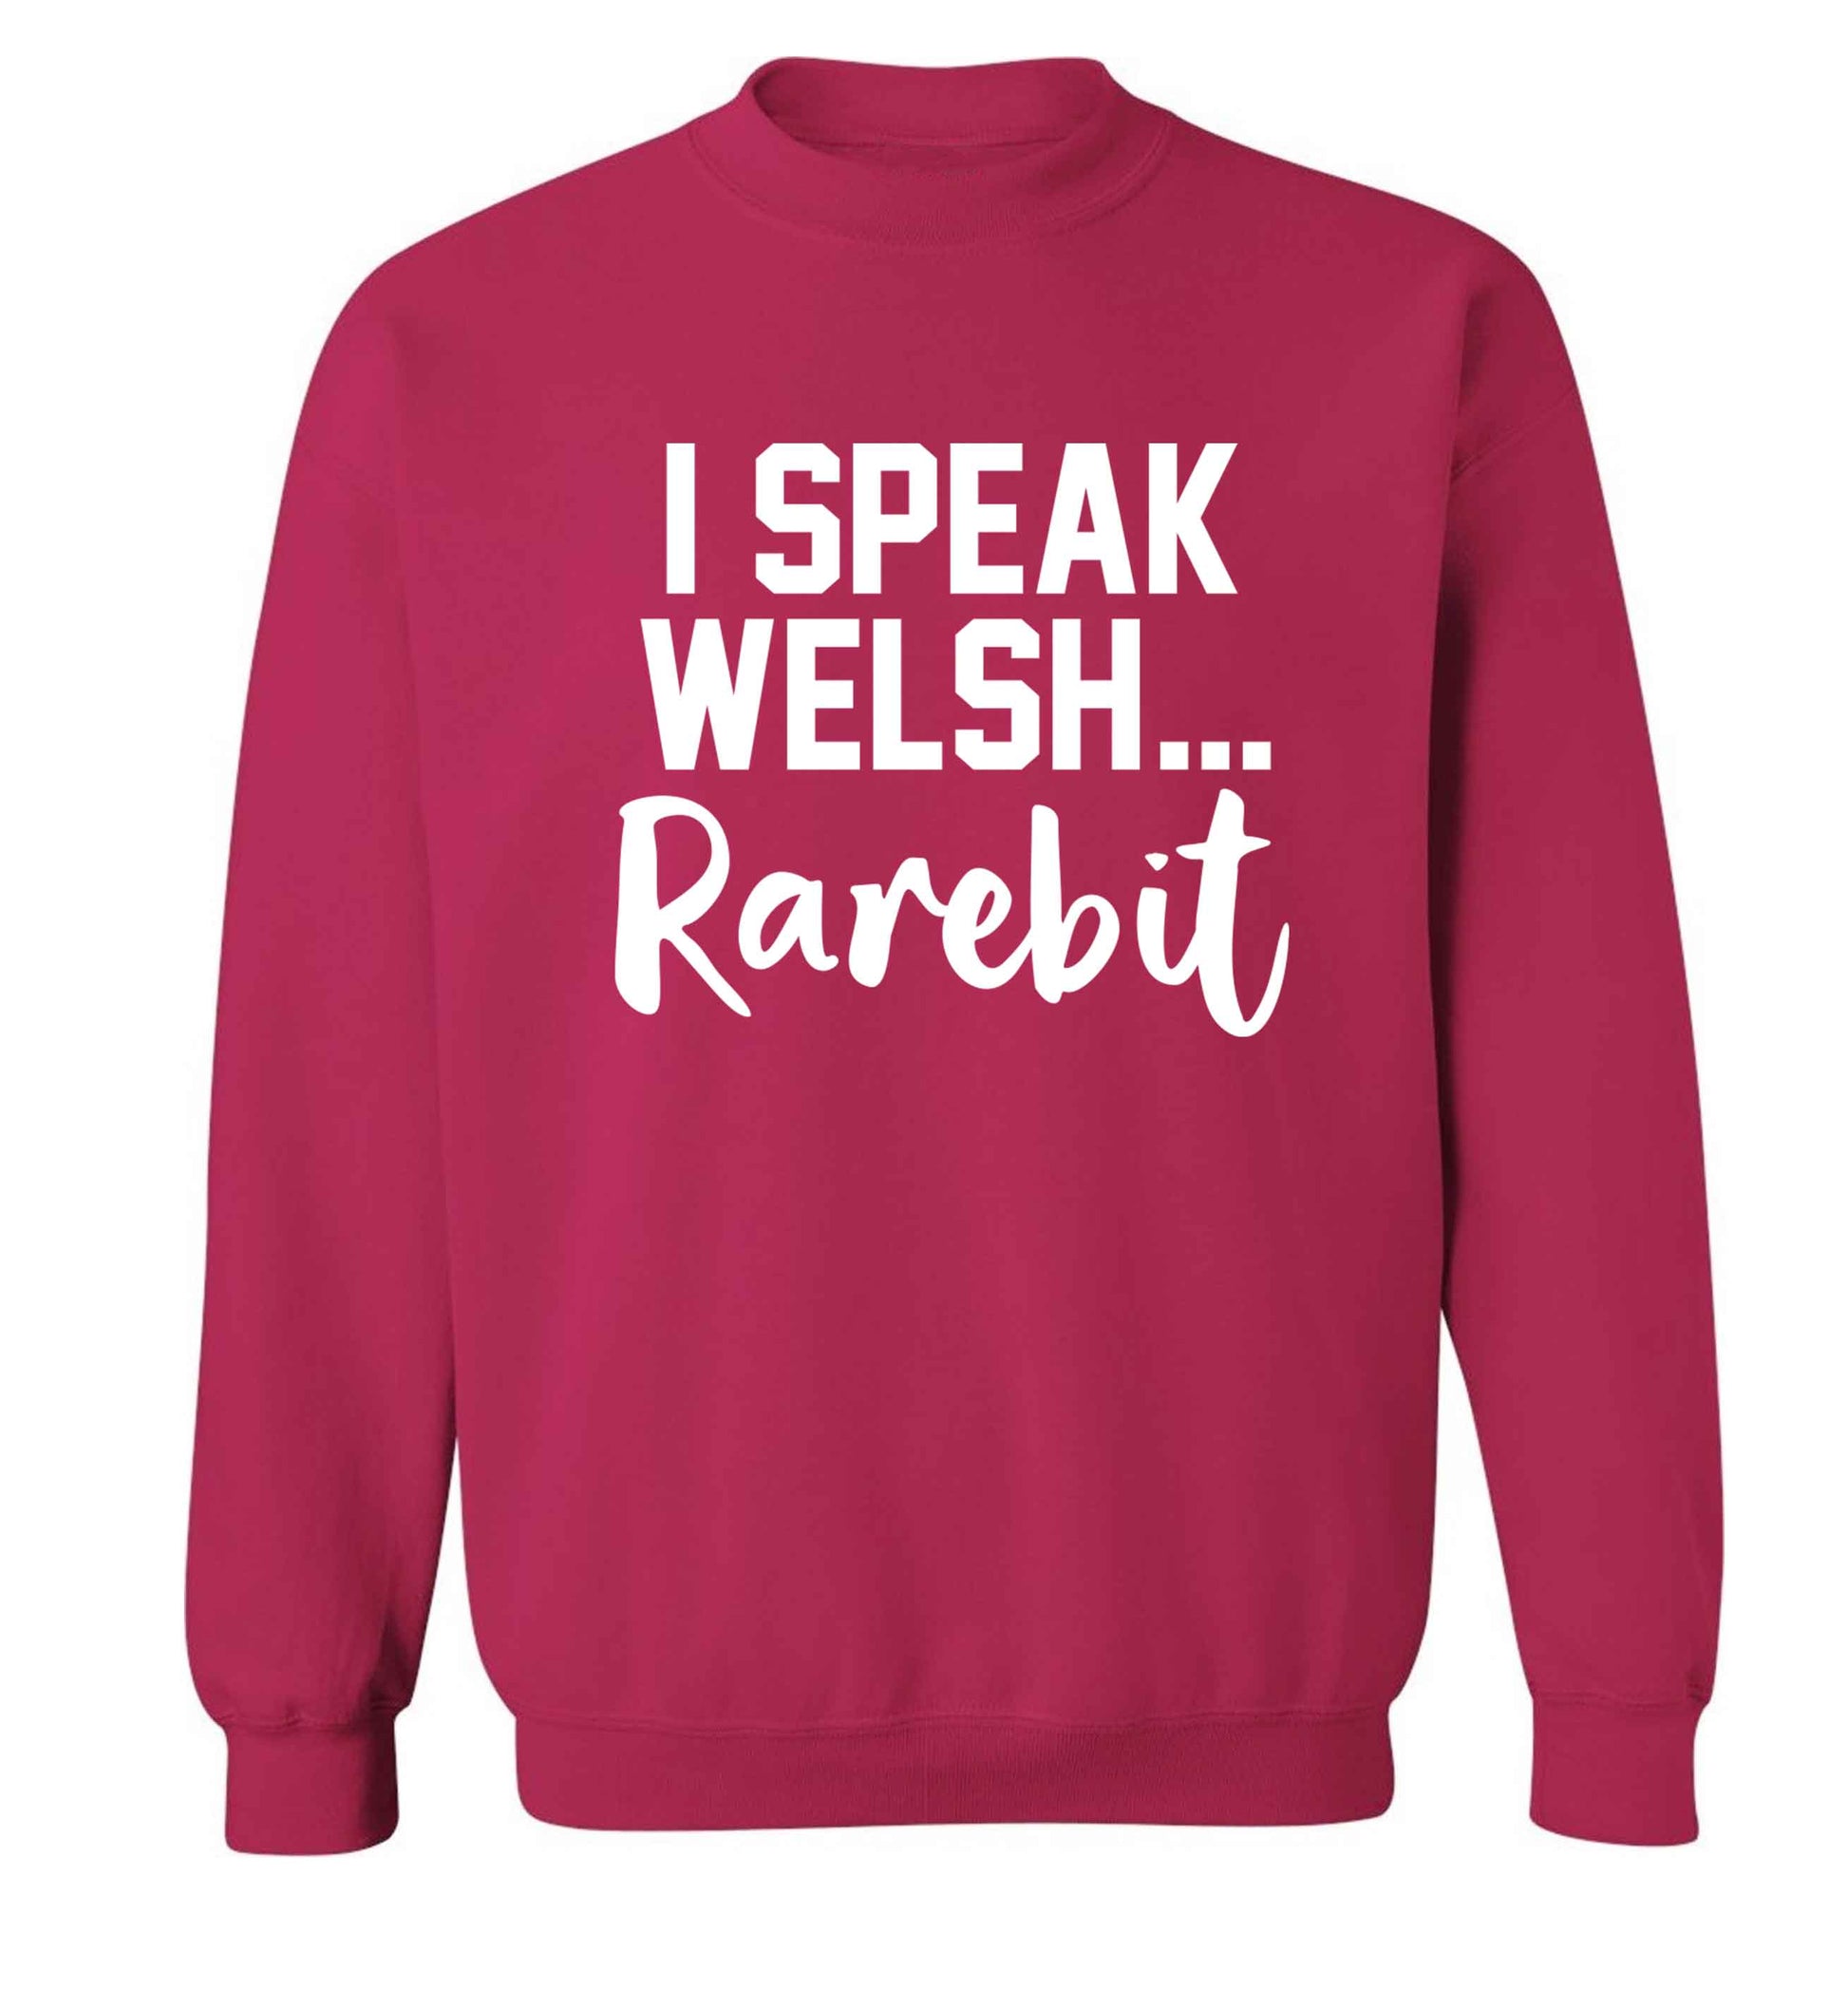 I speak Welsh...rarebit Adult's unisex pink Sweater 2XL